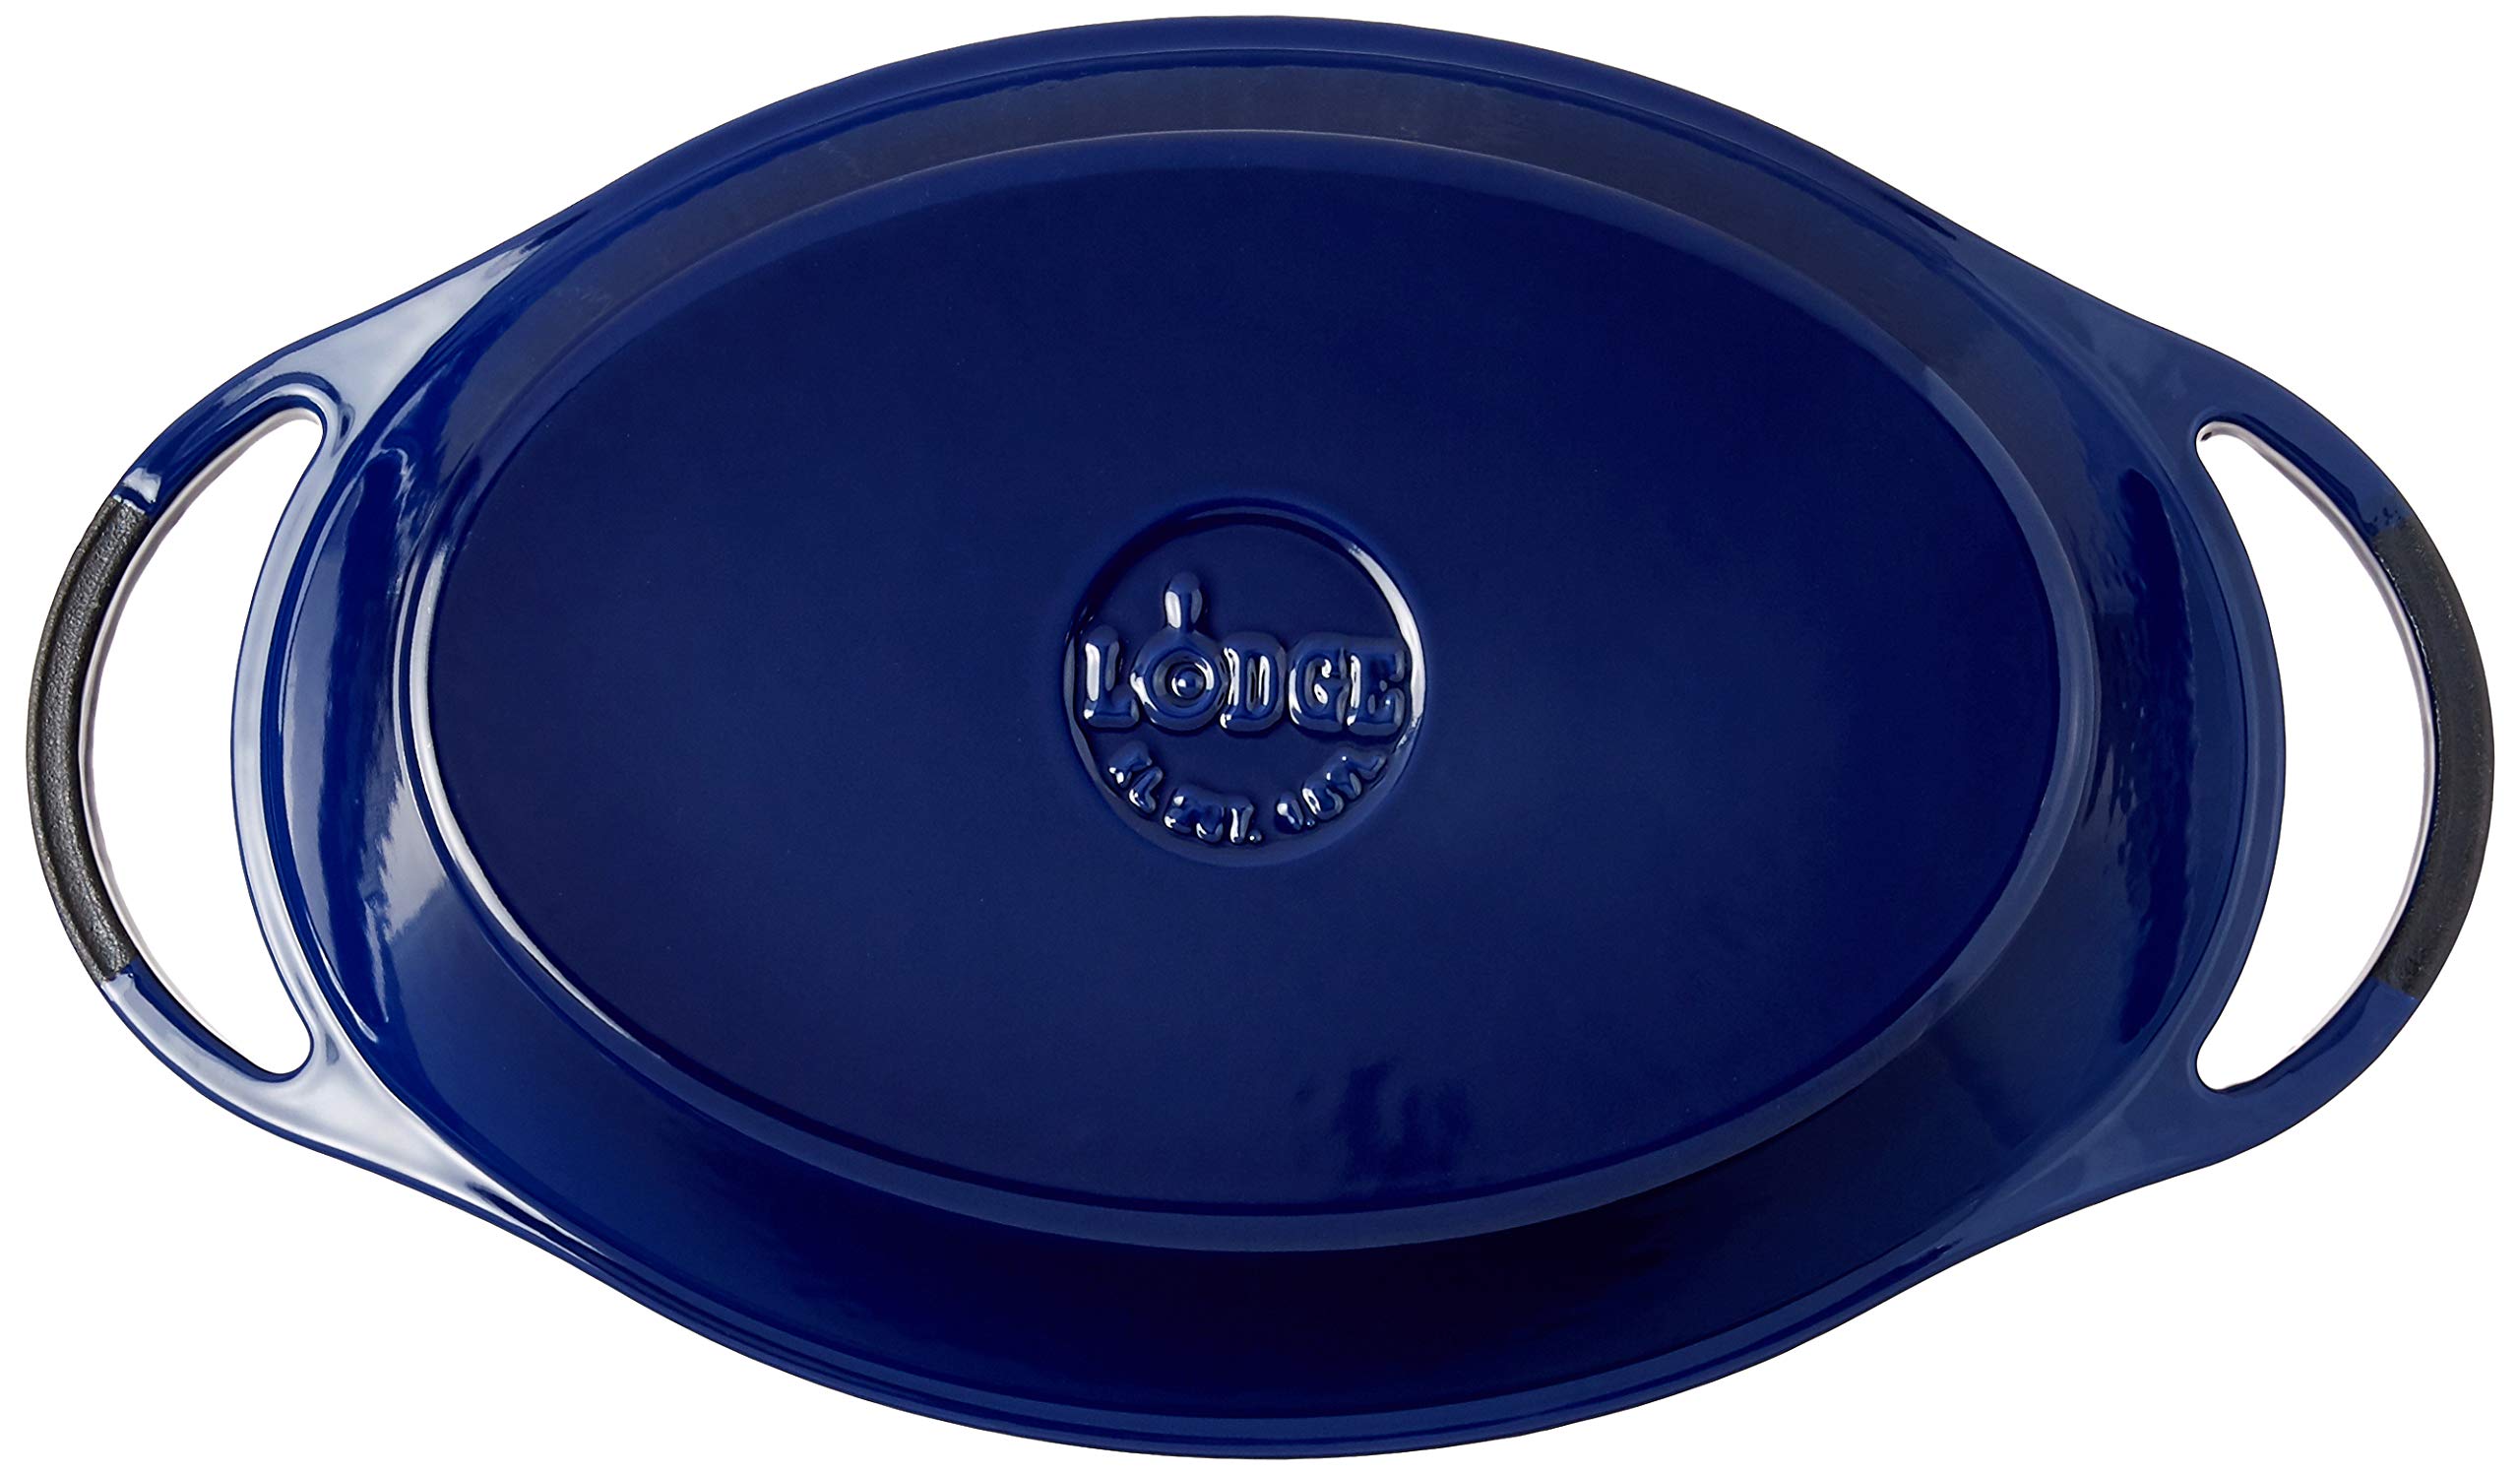 Lodge Oval casserole, 2 Quart, Blue